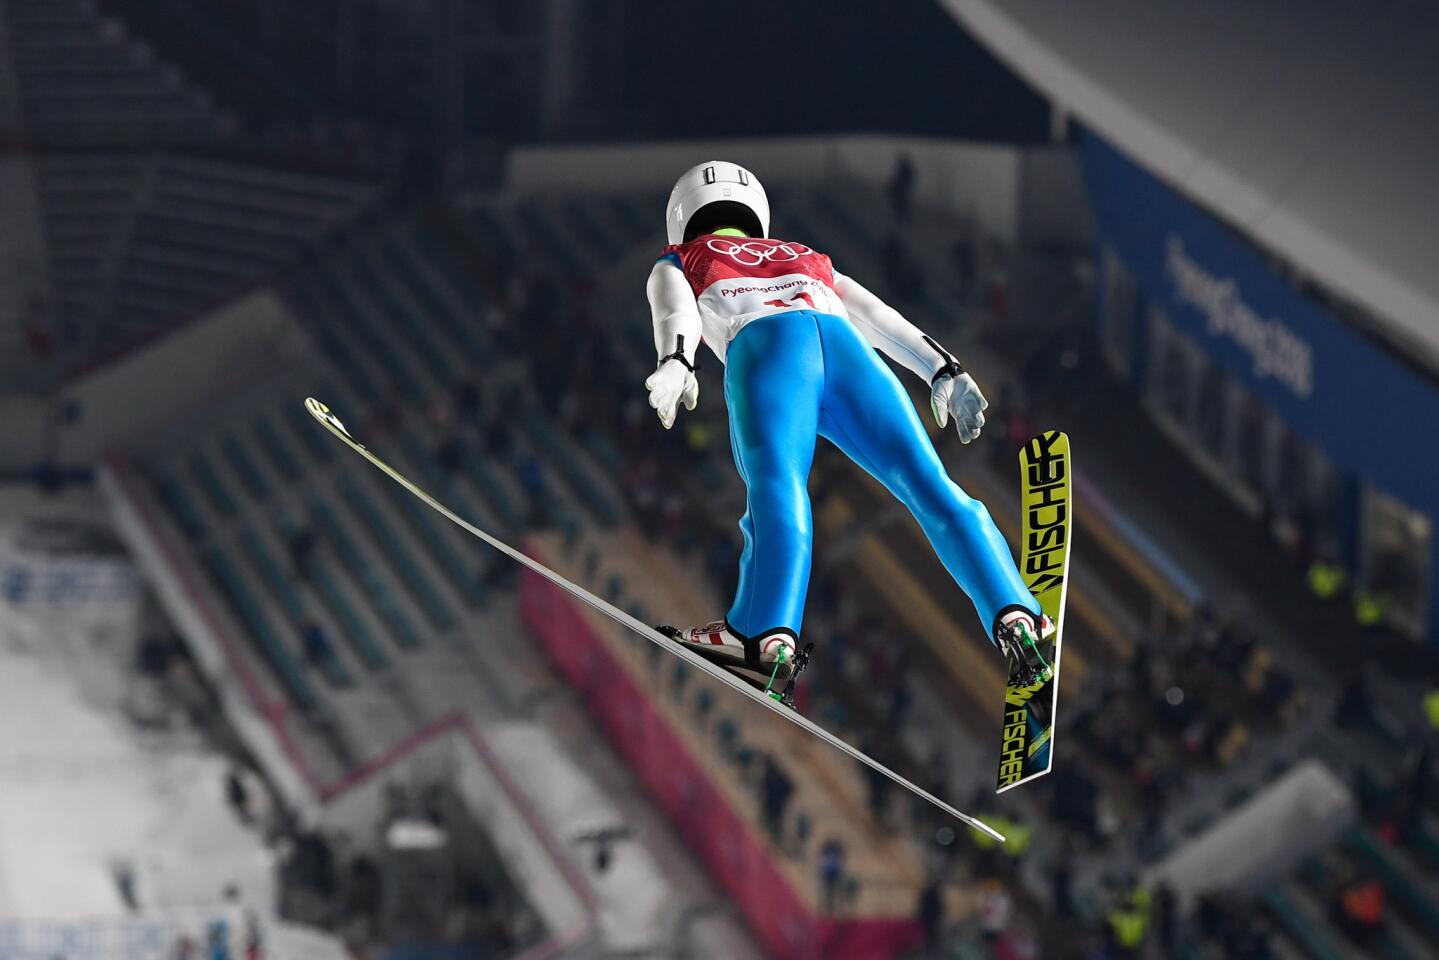 2018 Winter Olympic Games - Ski jumping